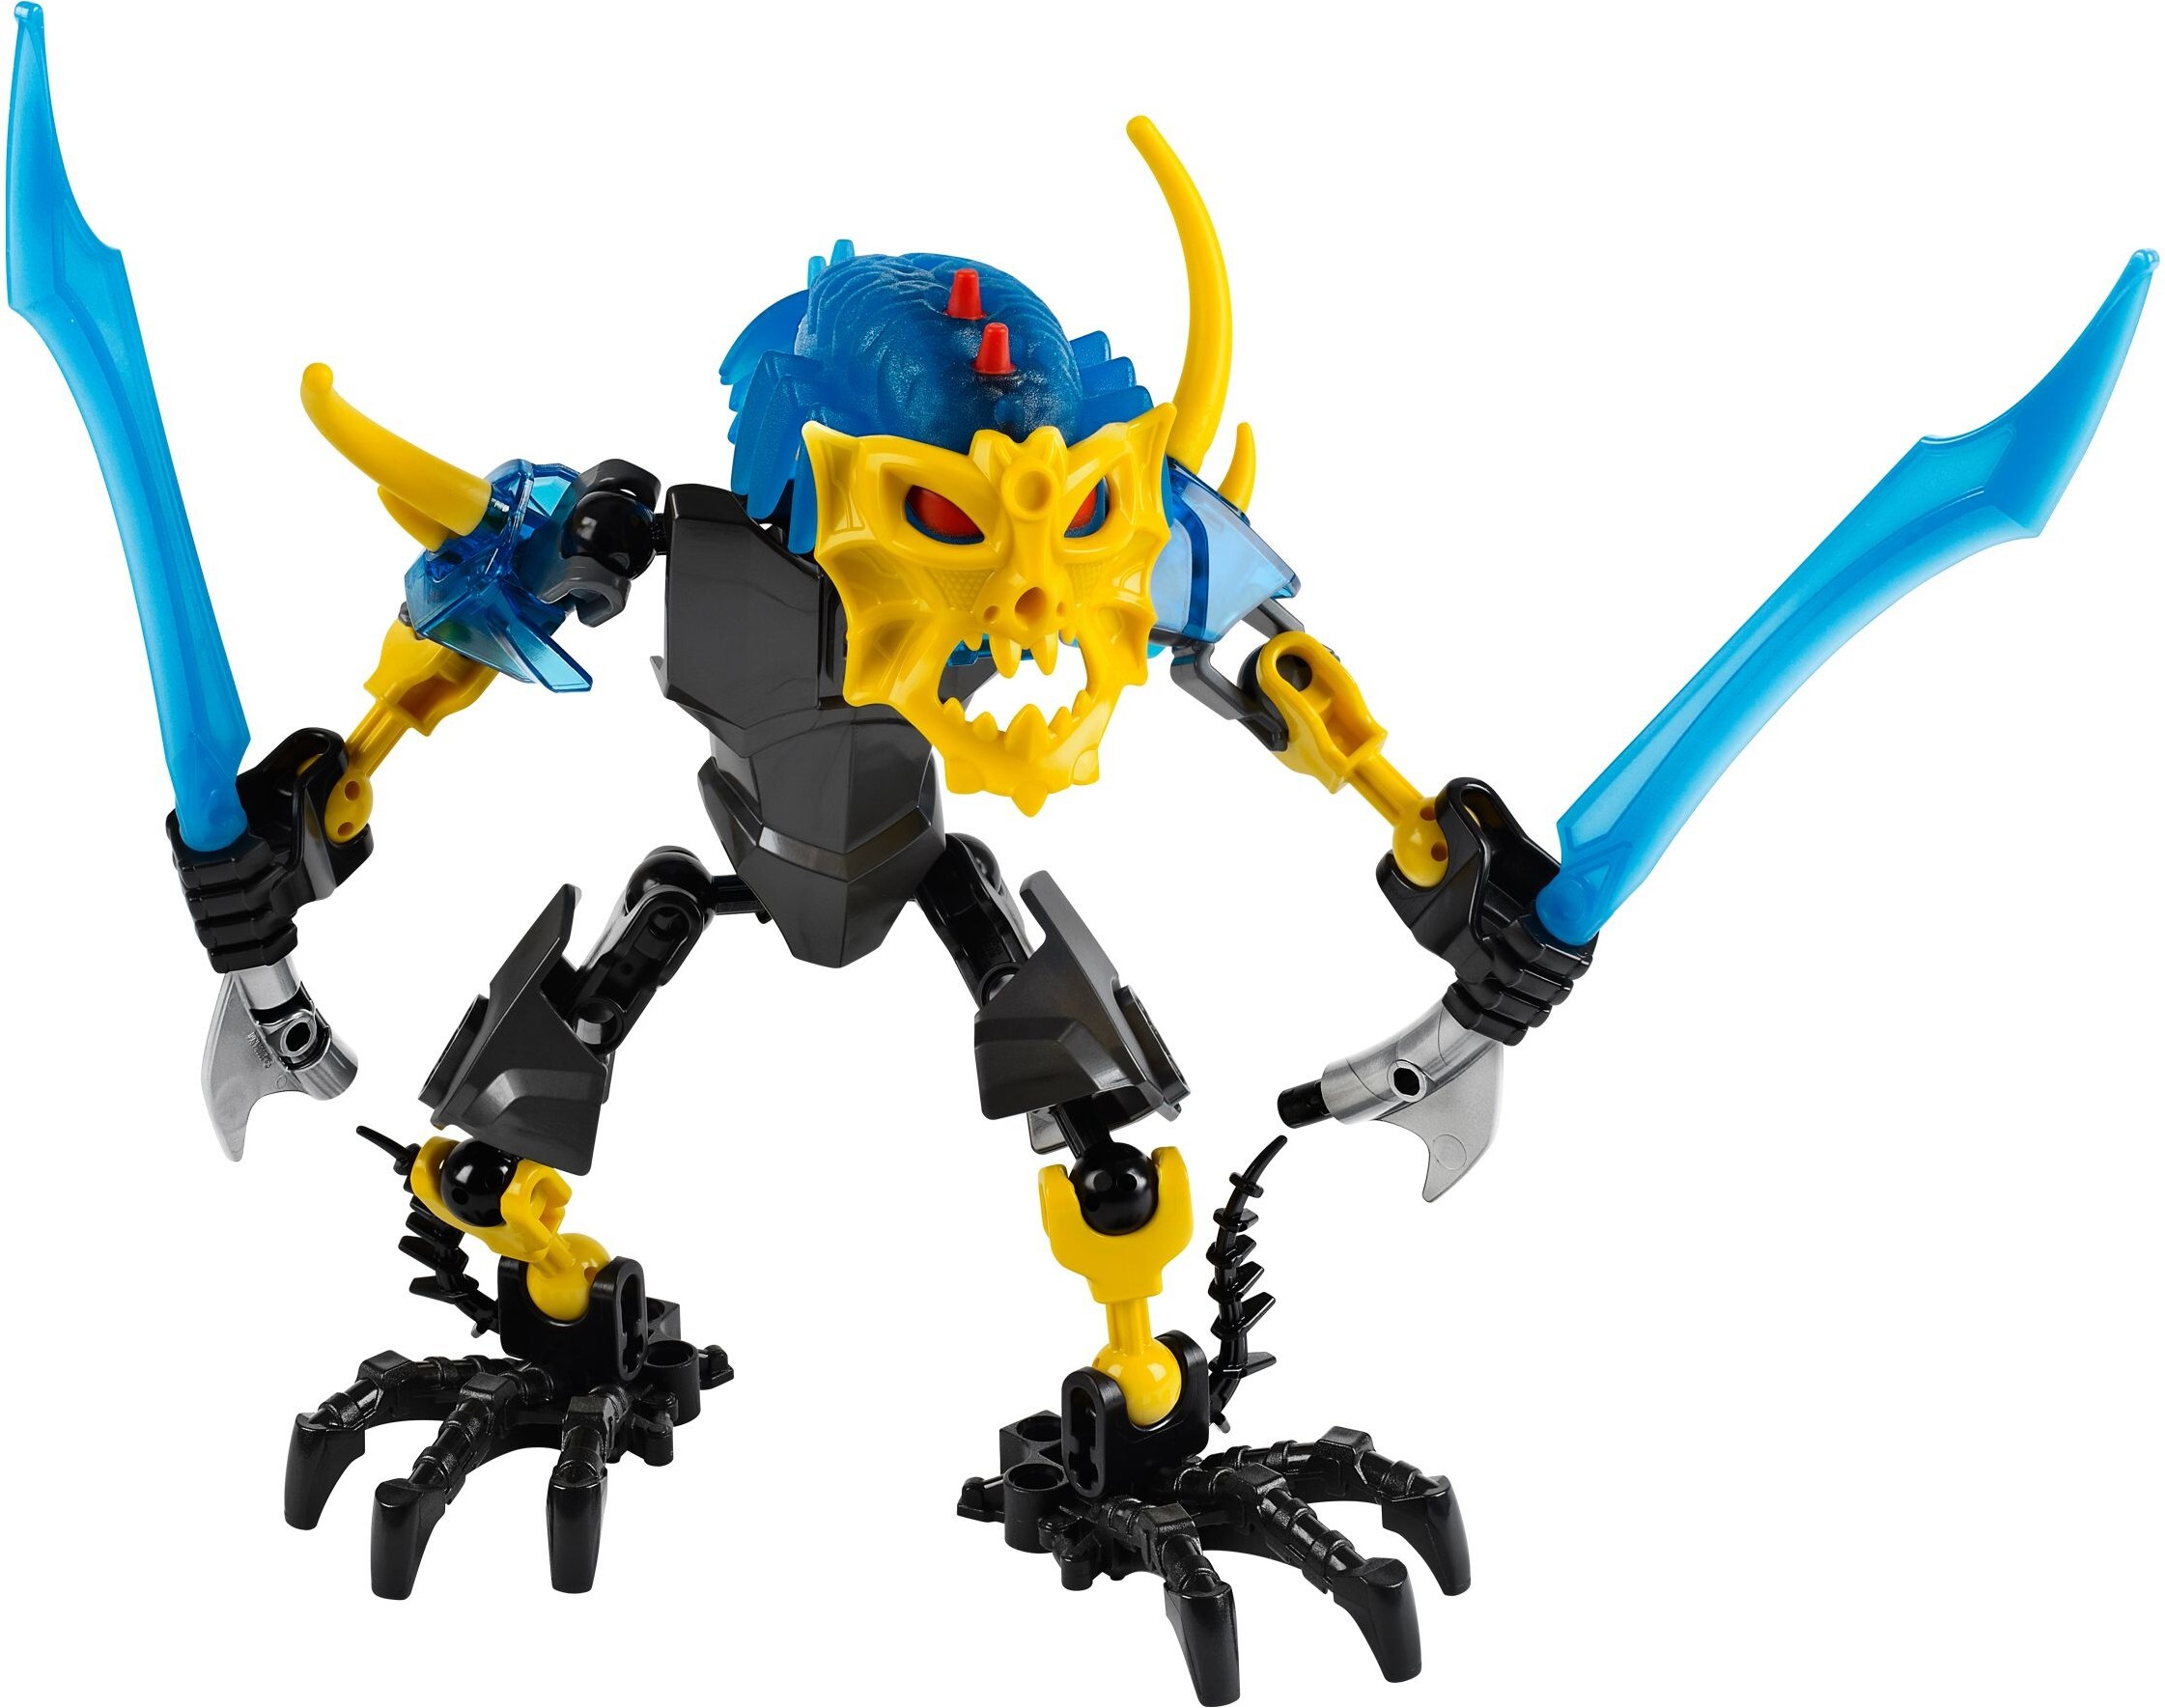 Lego 44013 Factory: Monster